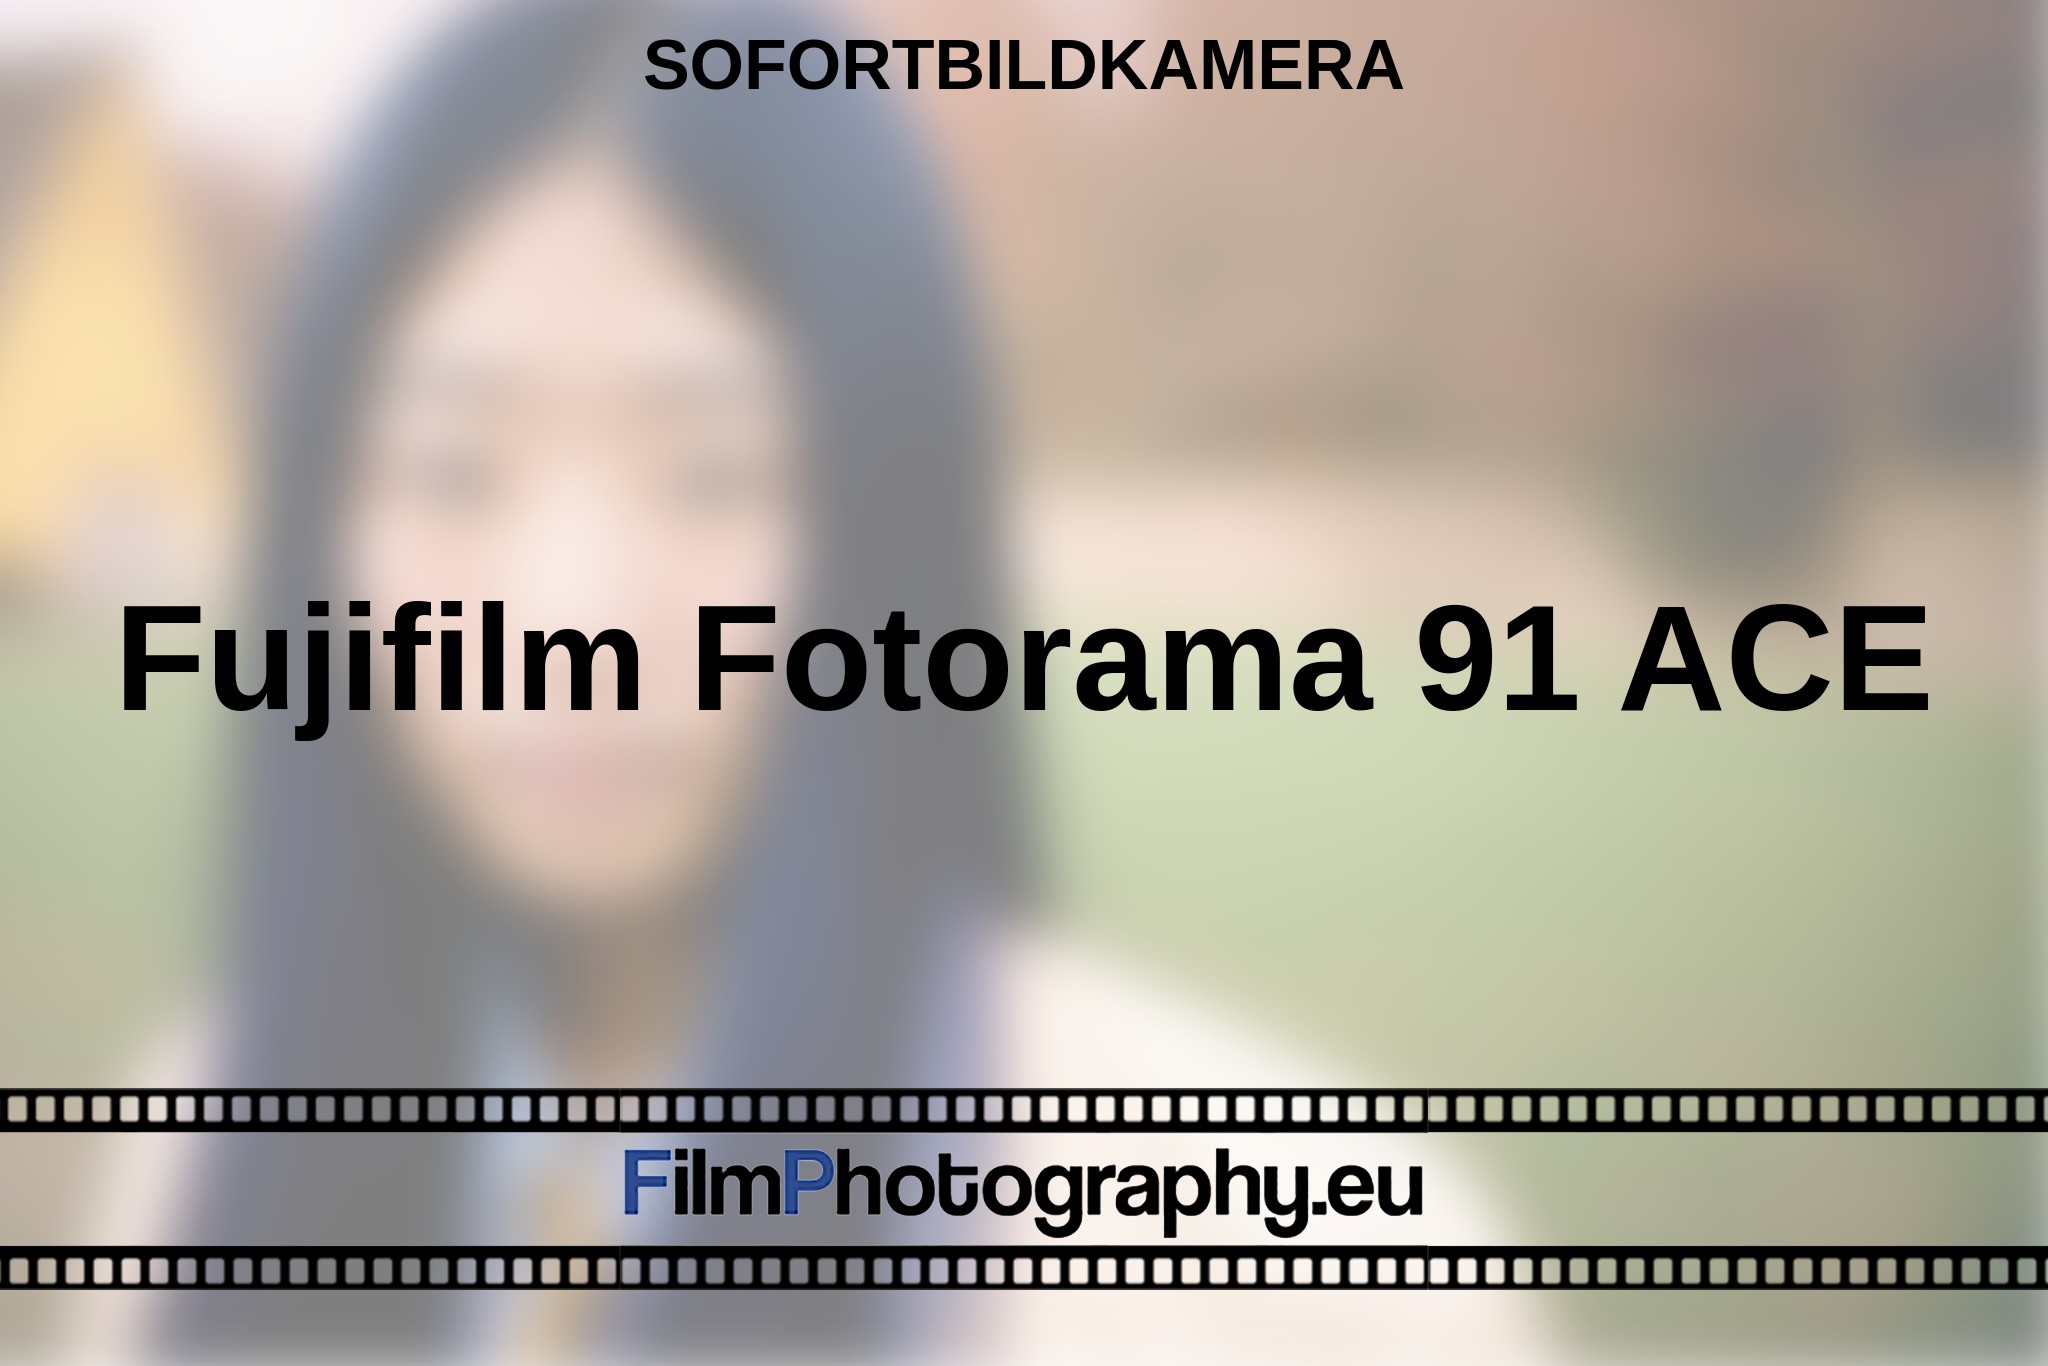 fujifilm-fotorama-91-ace-sofortbildkamera-bnv.jpg